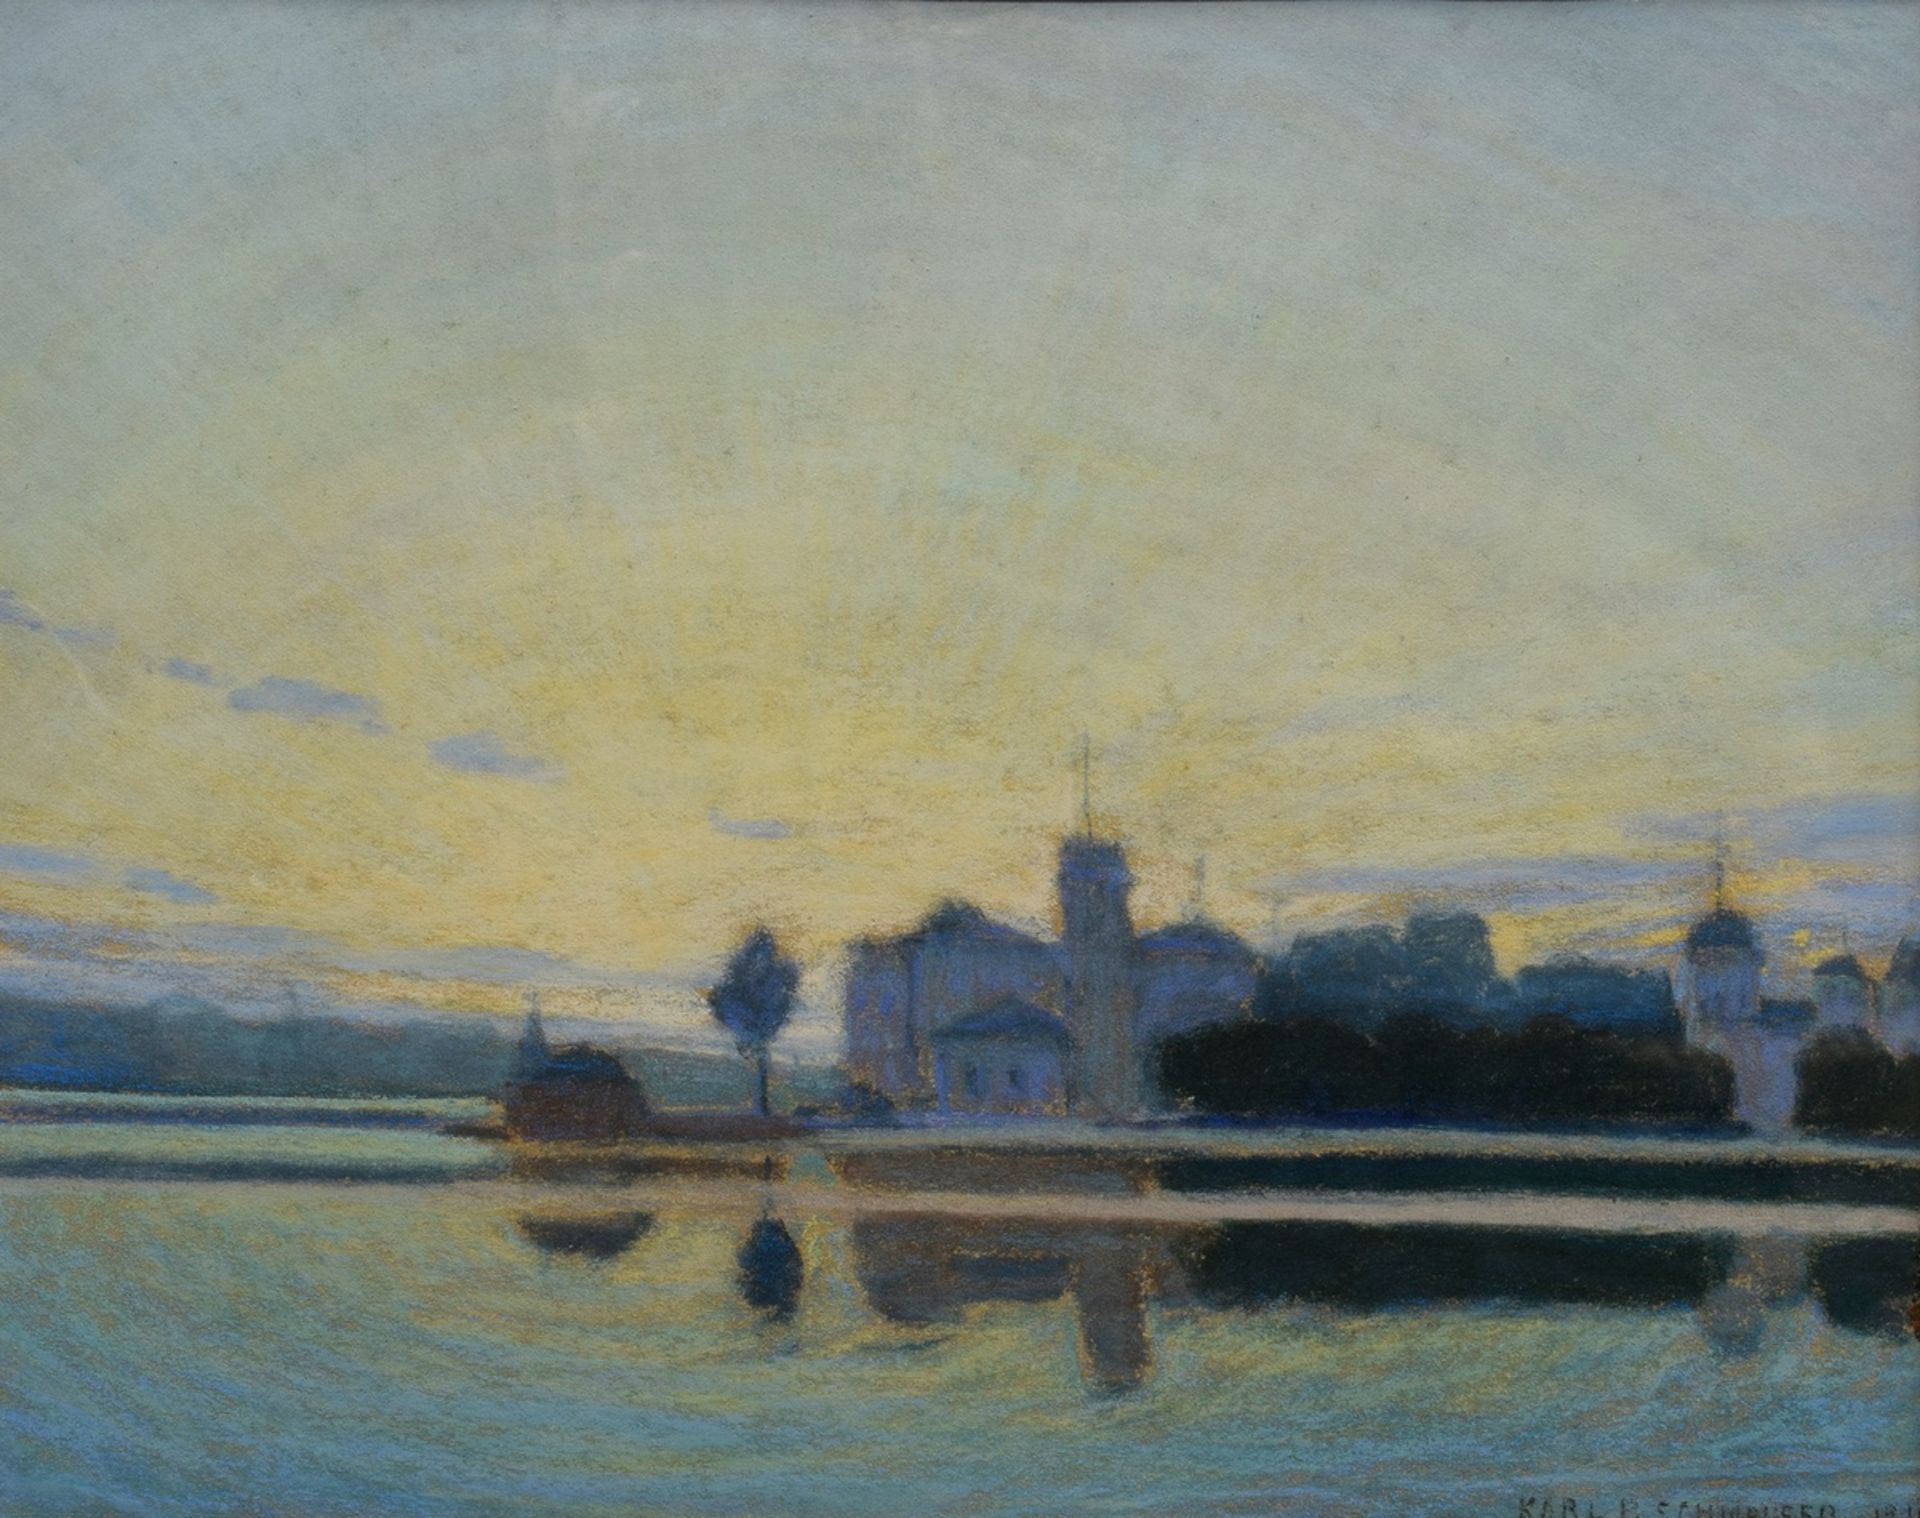 Schmauser, Karl P. (1883-?) "Uhlenhorster Ferry House at Sunrise" 1911, pastel/paper, b.r. sign./da